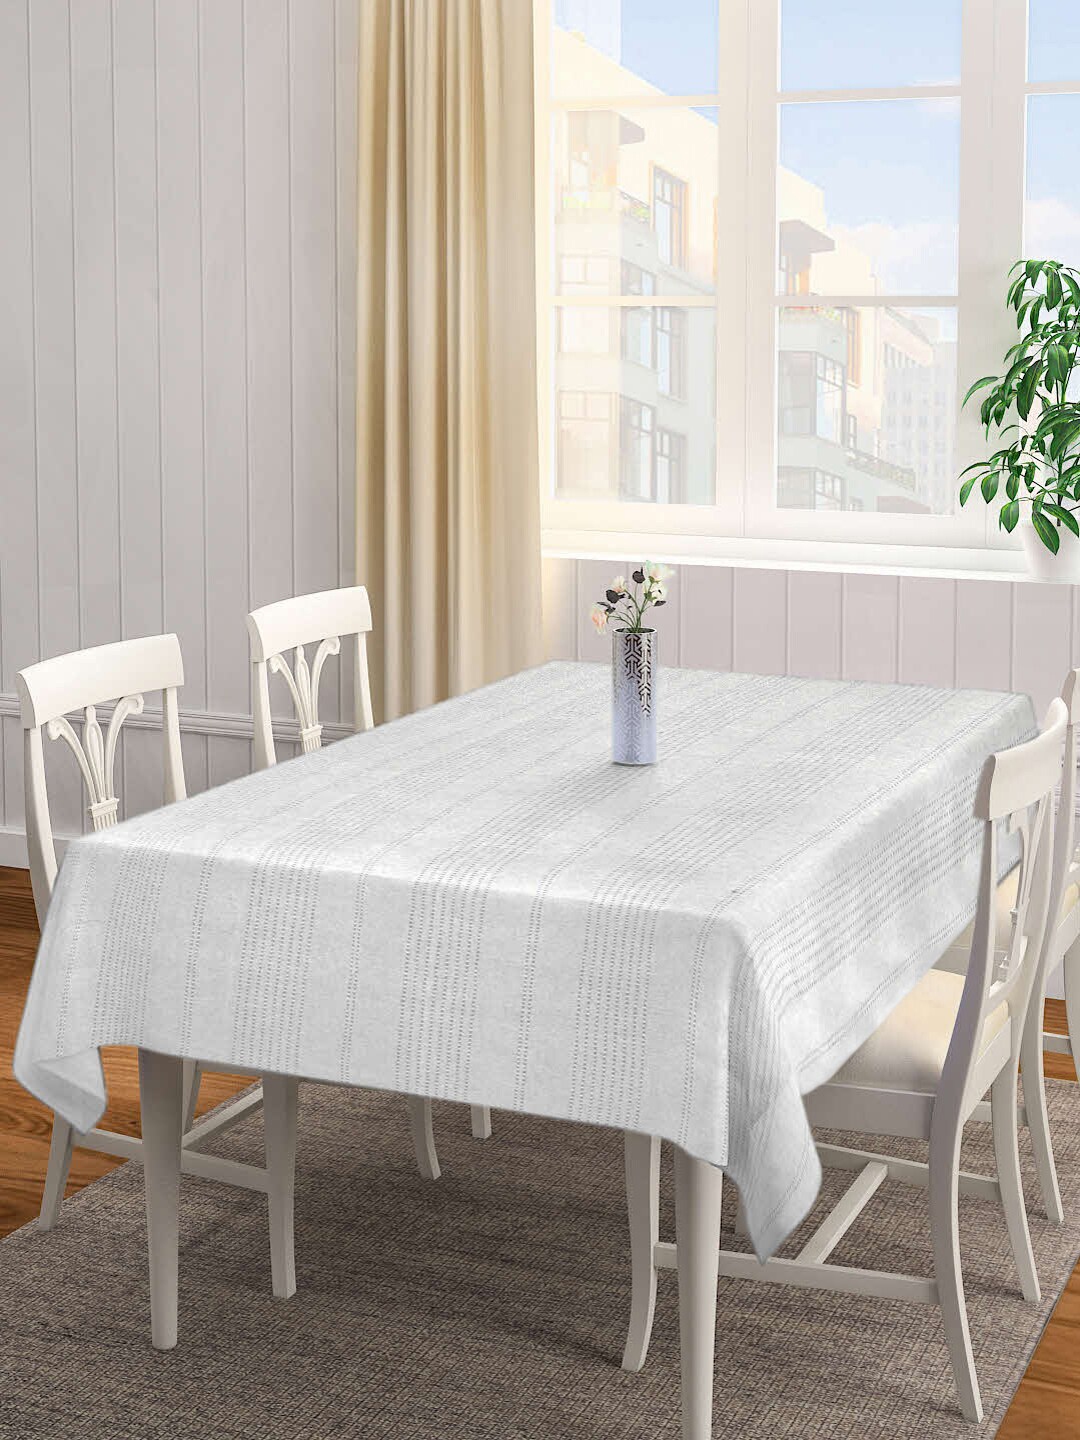 KLOTTHE Grey   White Striped Cotton 6 Seater Rectangular Table Cover